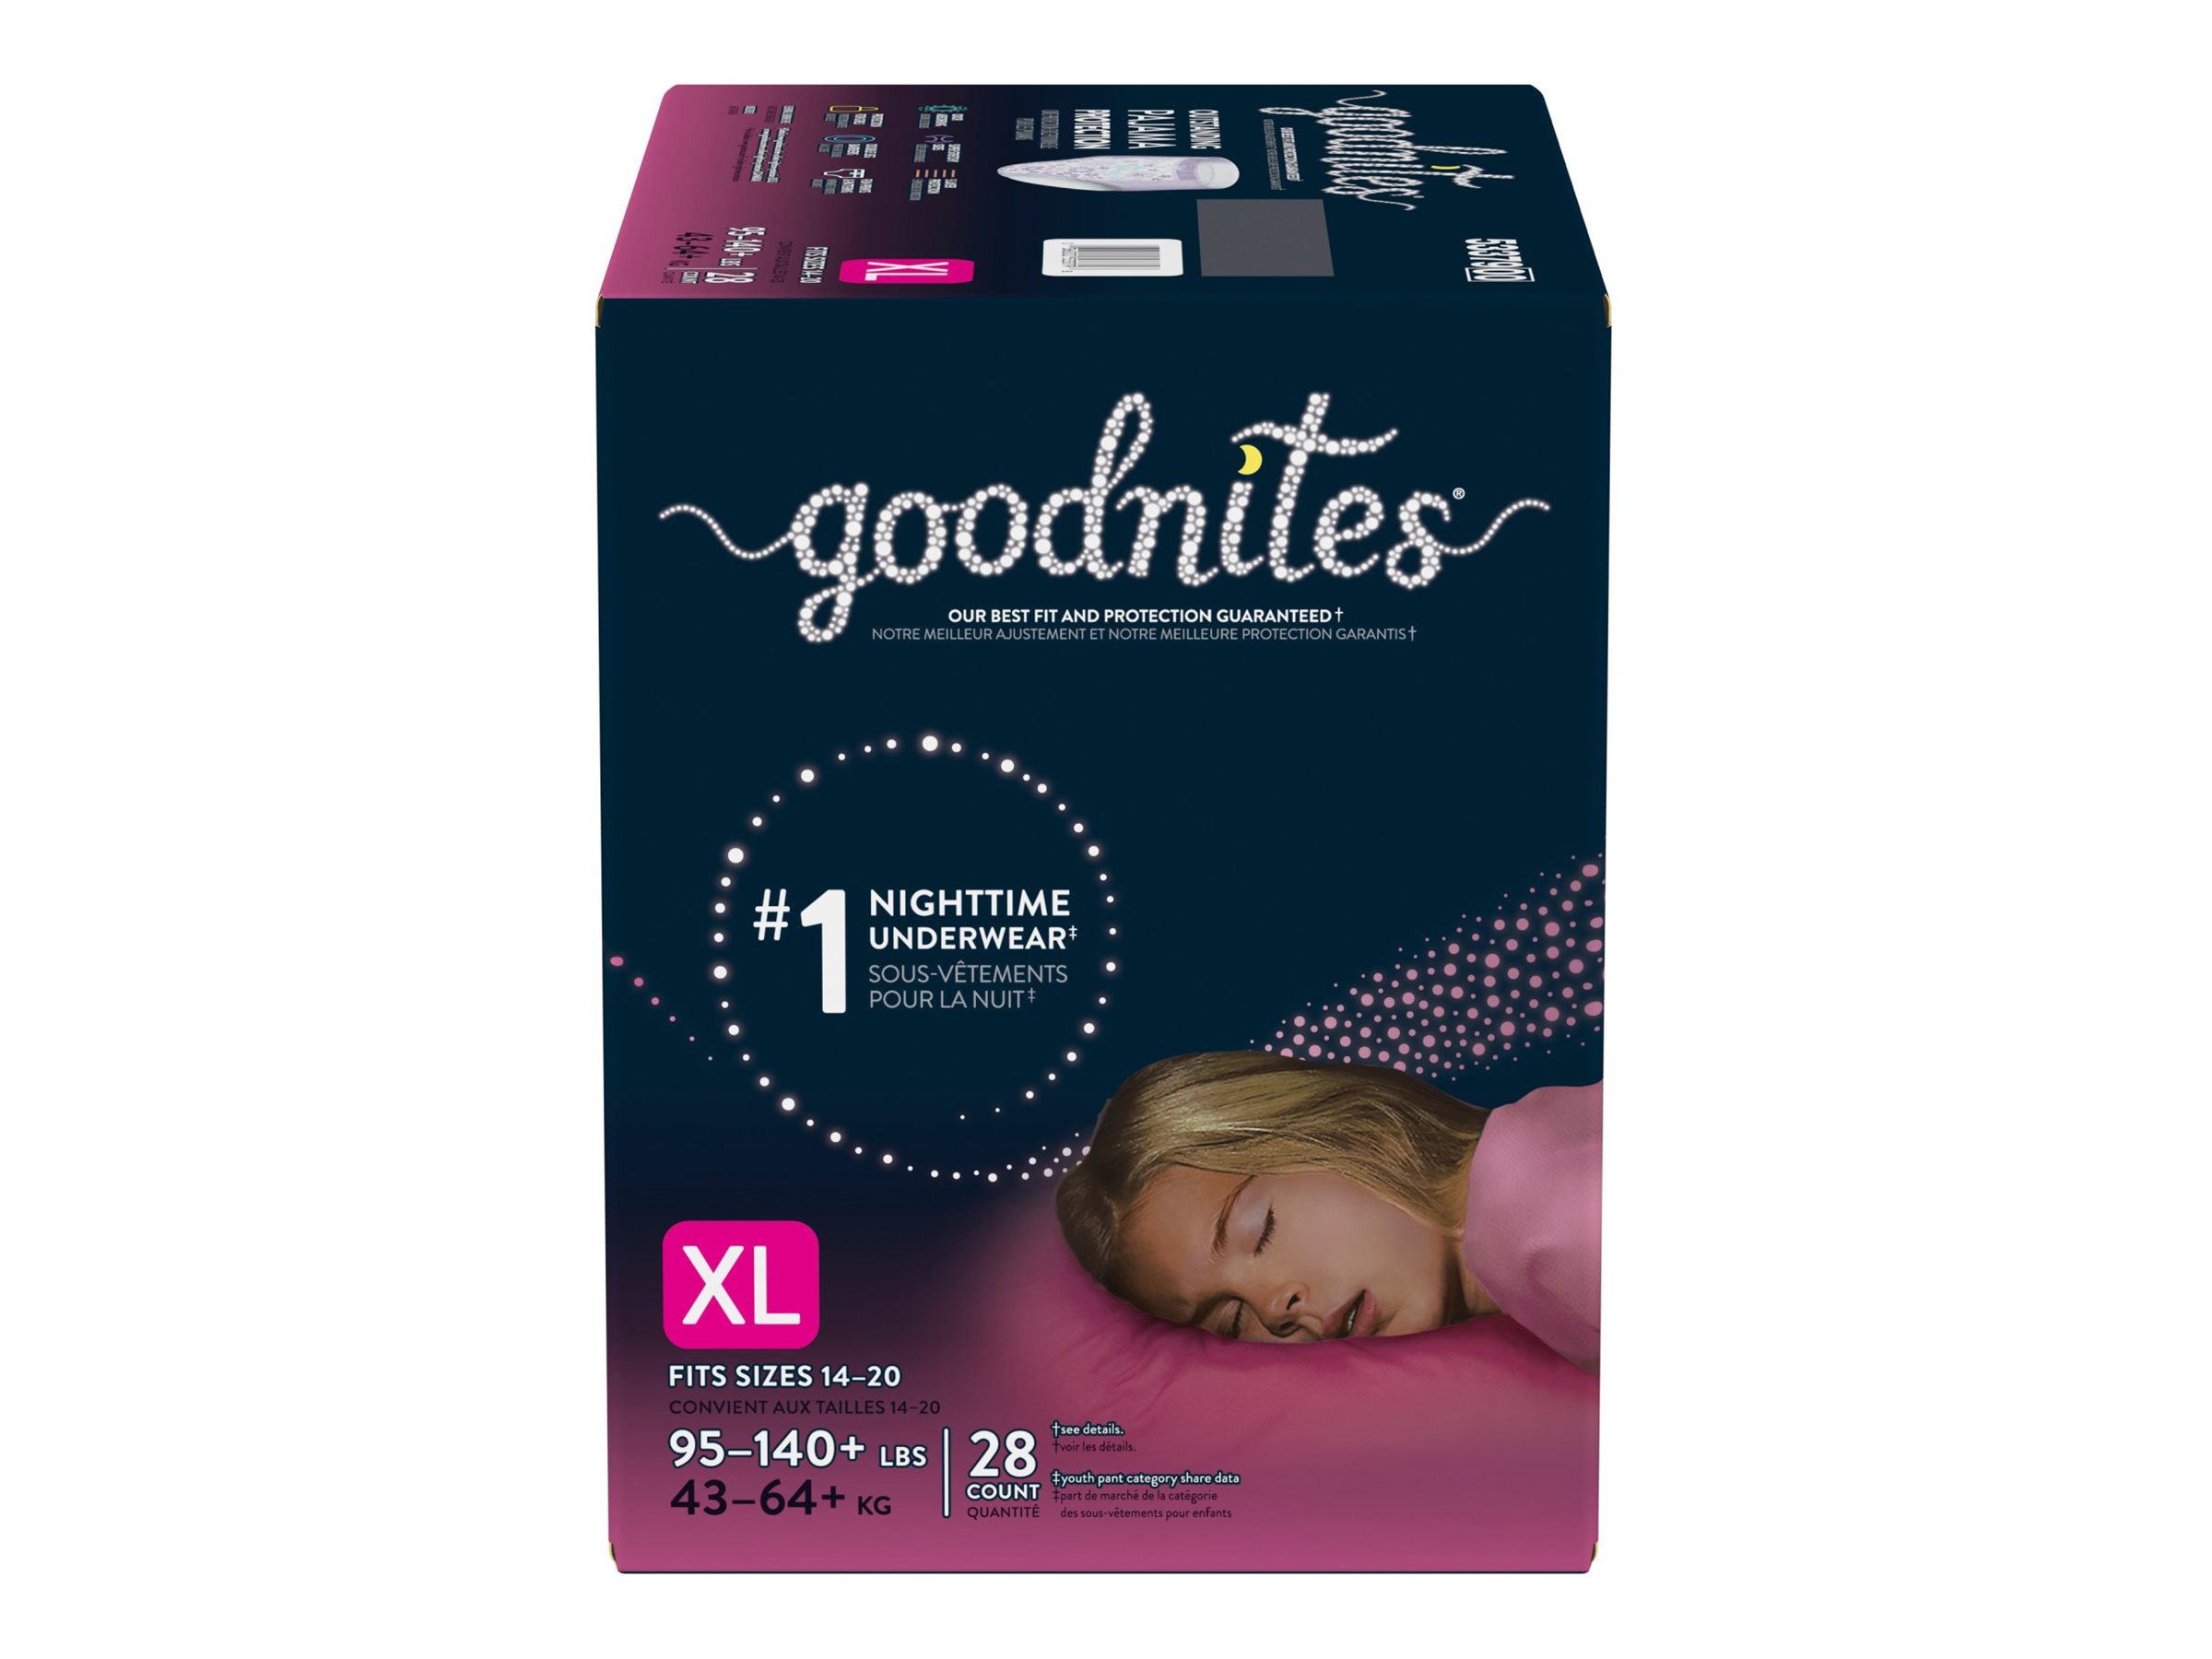 Goodnites Girls' Nighttime Bedwetting Underwear, S/M, Large, XL